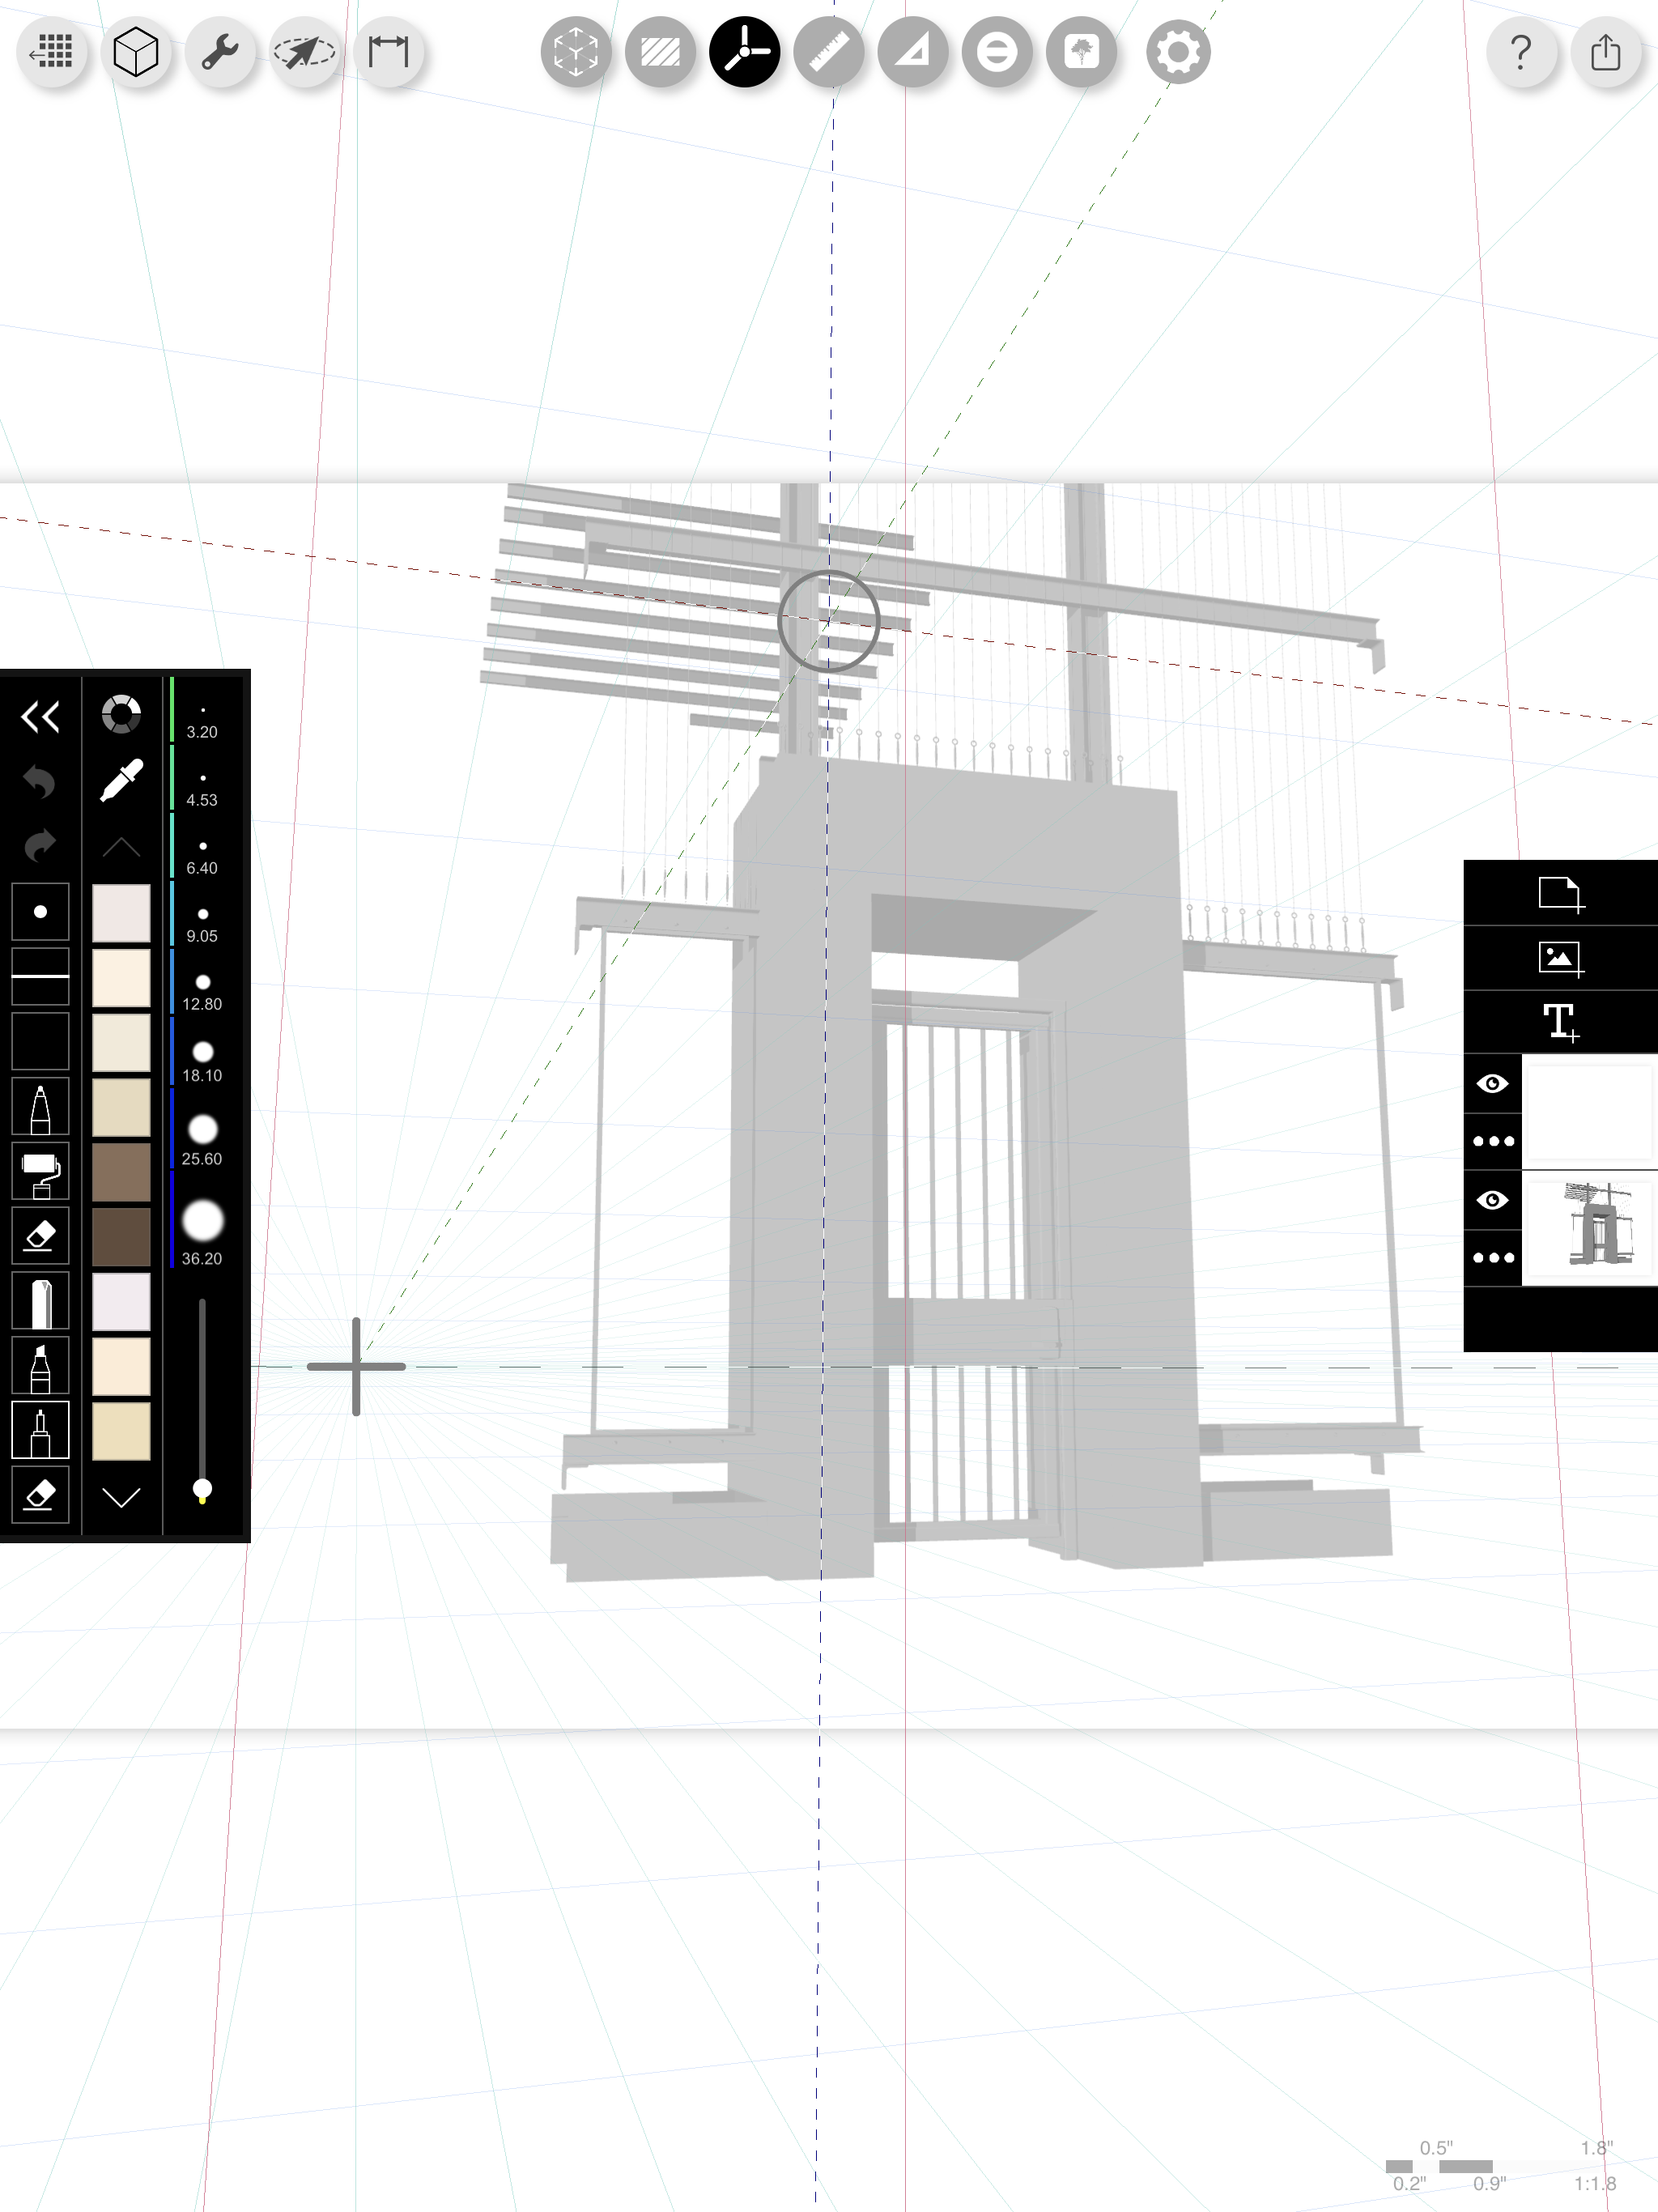 Sketch on 3D Models: View Setup - Morpholio Trace User Guide